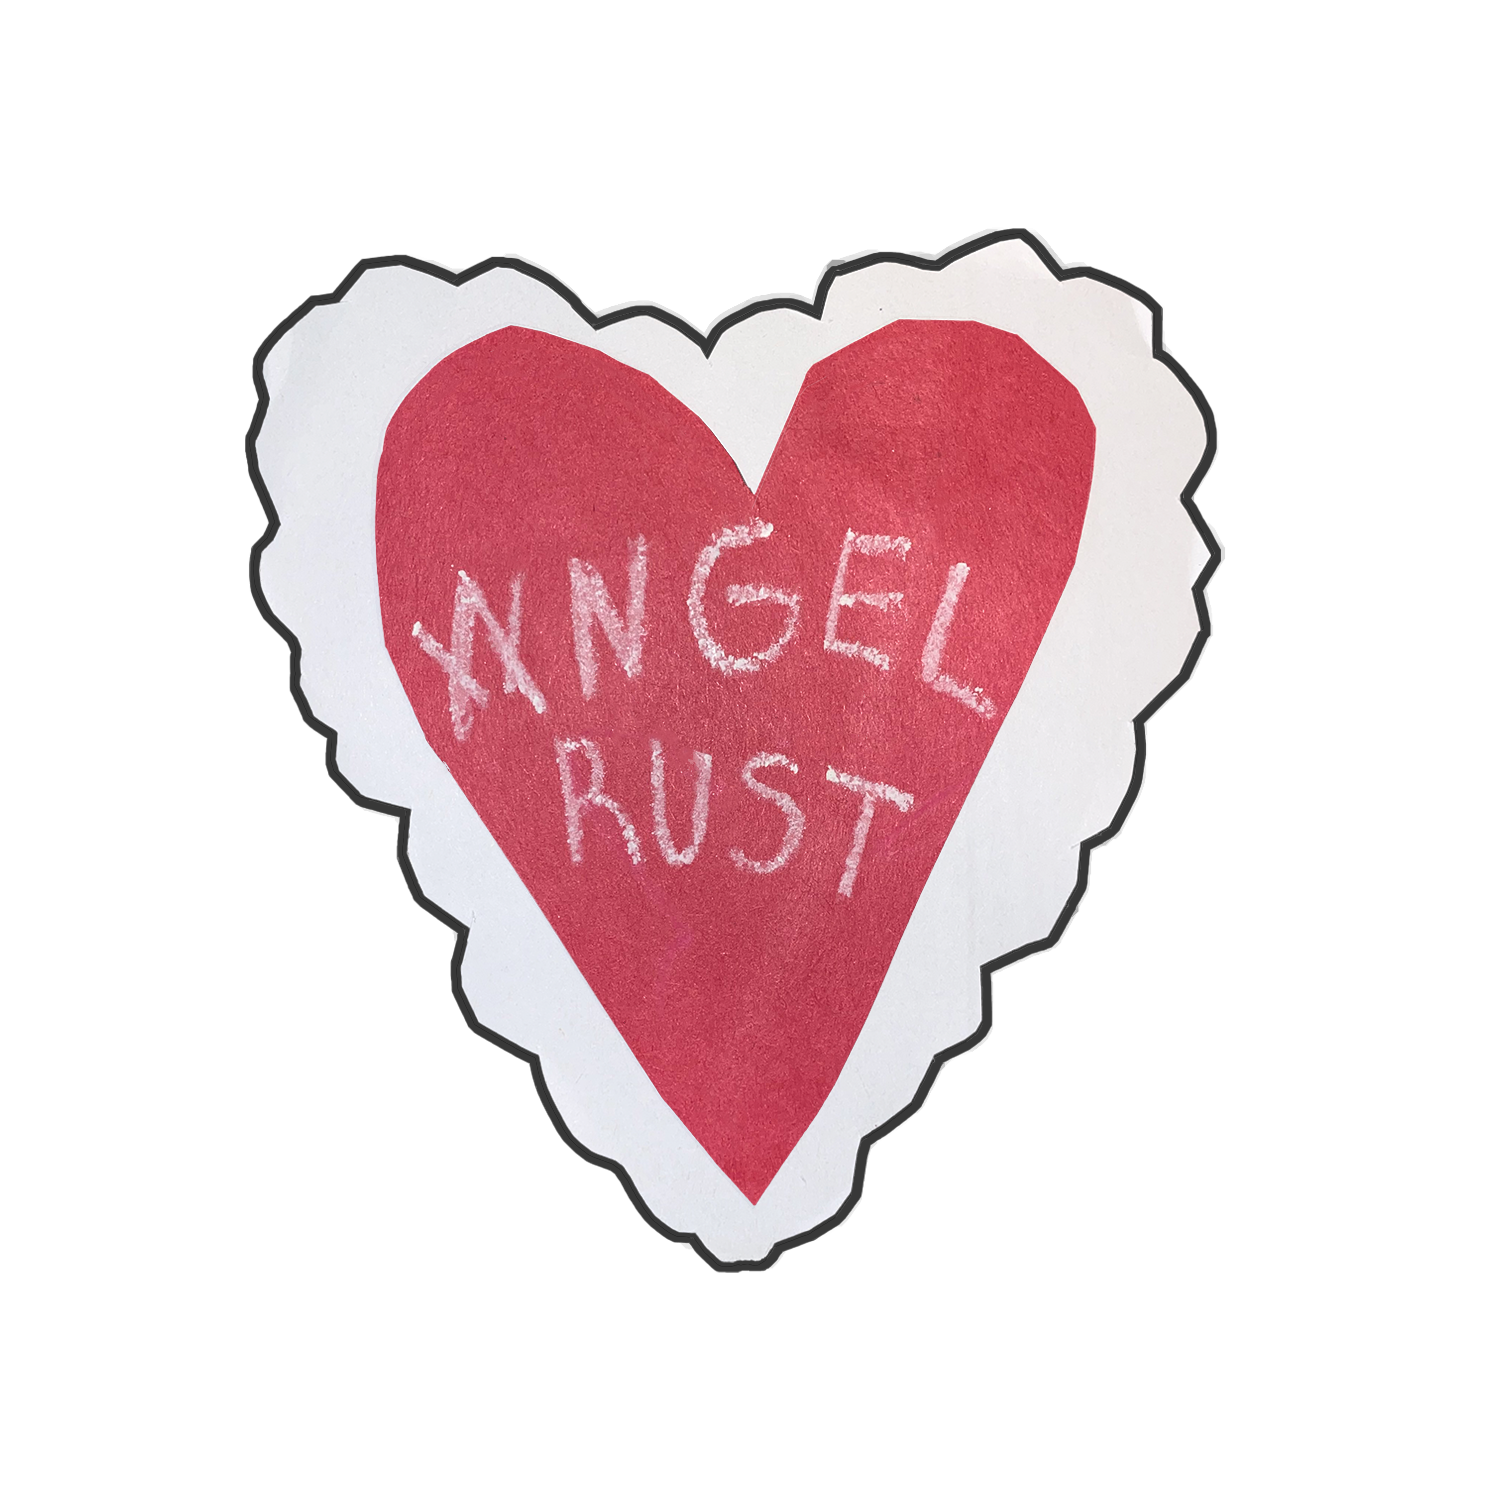 Angel Rust